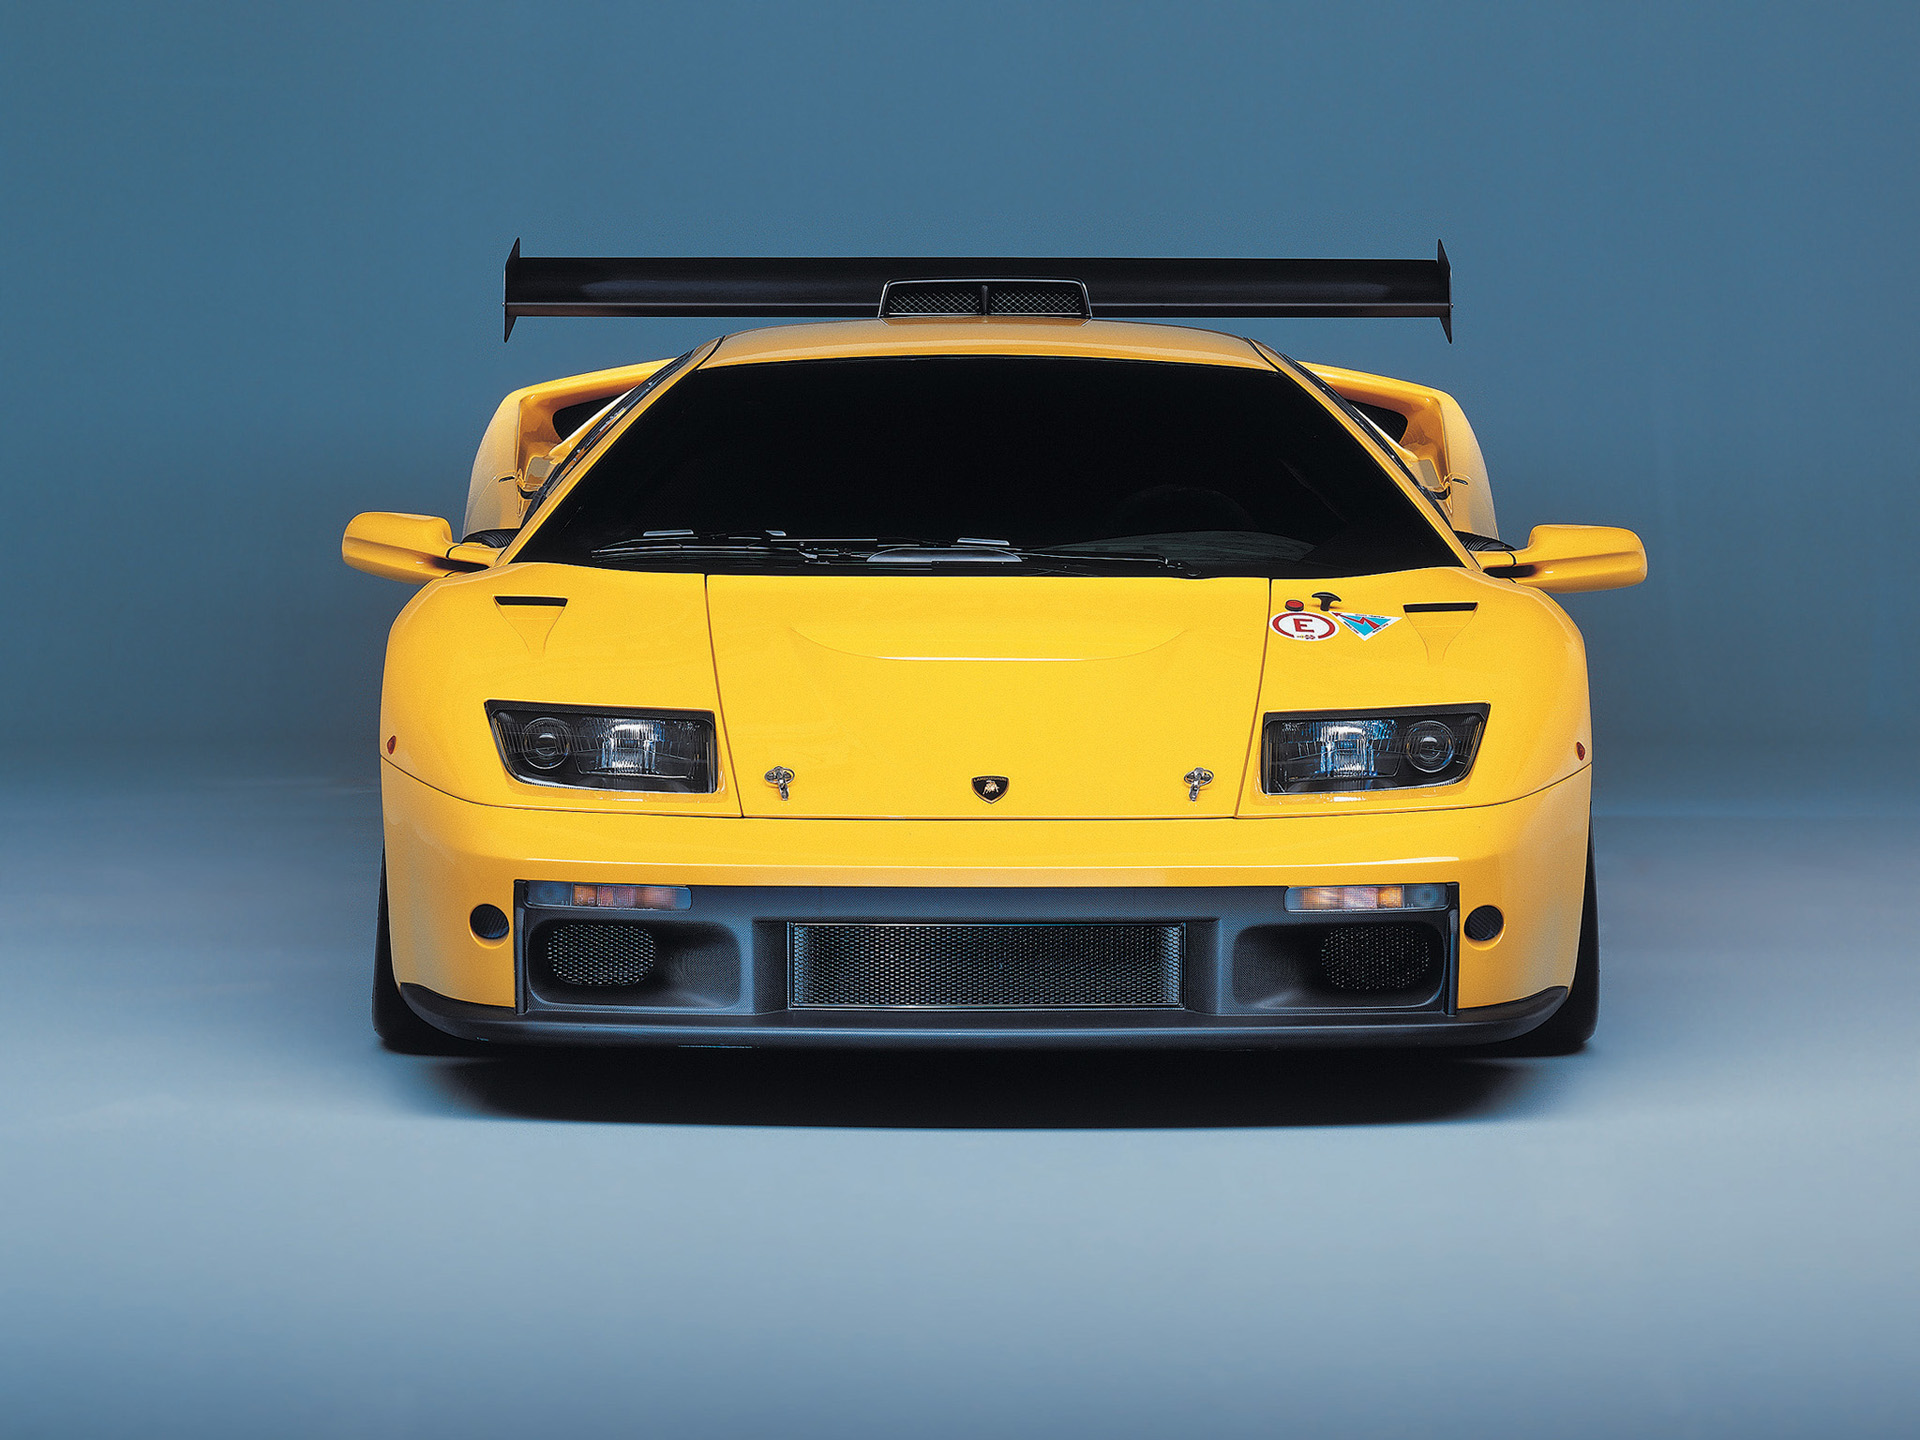 Laden Sie das Lamborghini, Autos, Lamborghini Diablo, Fahrzeuge, Gelbes Auto-Bild kostenlos auf Ihren PC-Desktop herunter